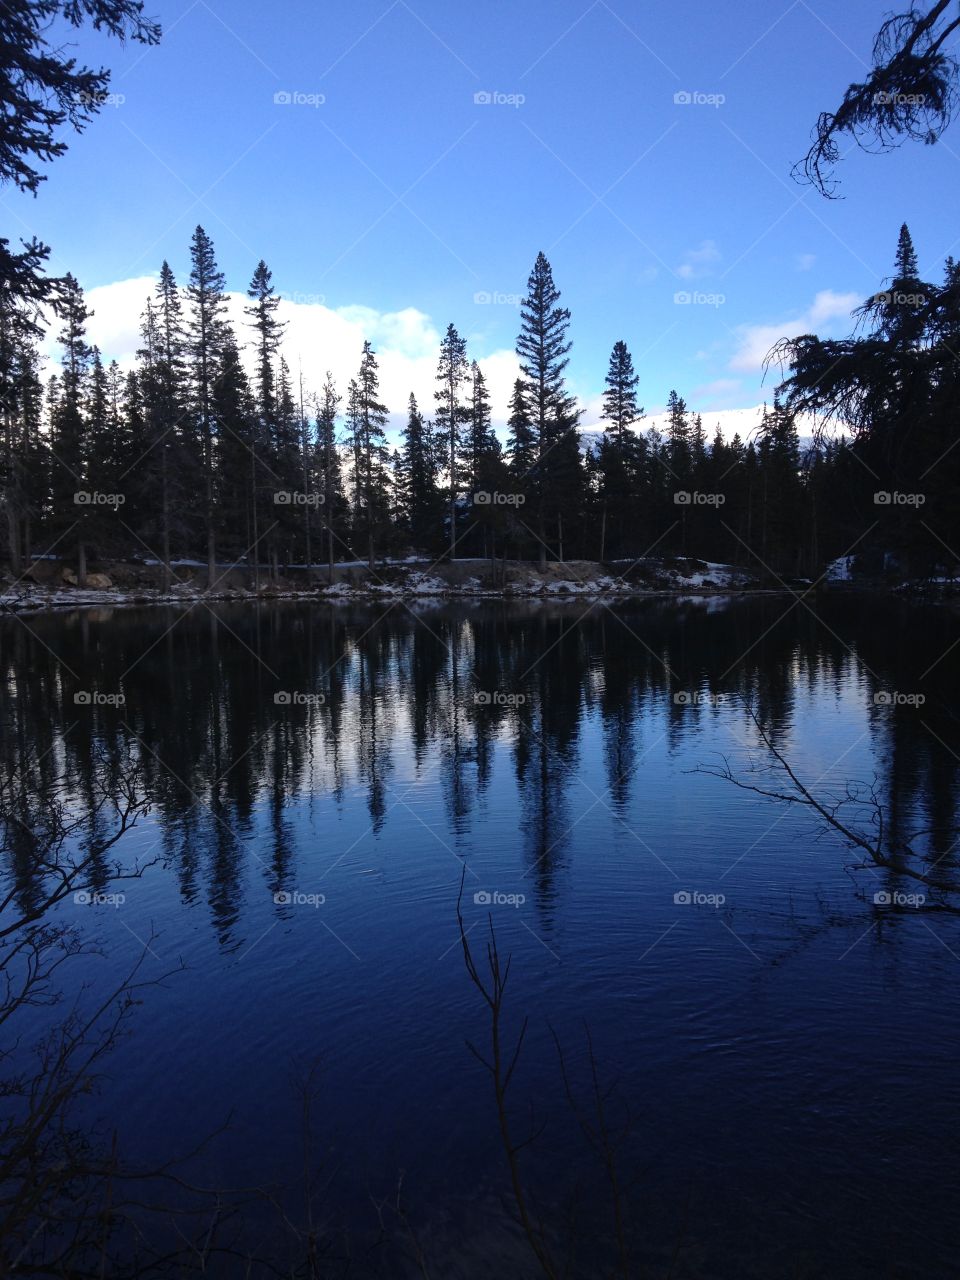 Lake and Tree Views mid-Winter British Columbia